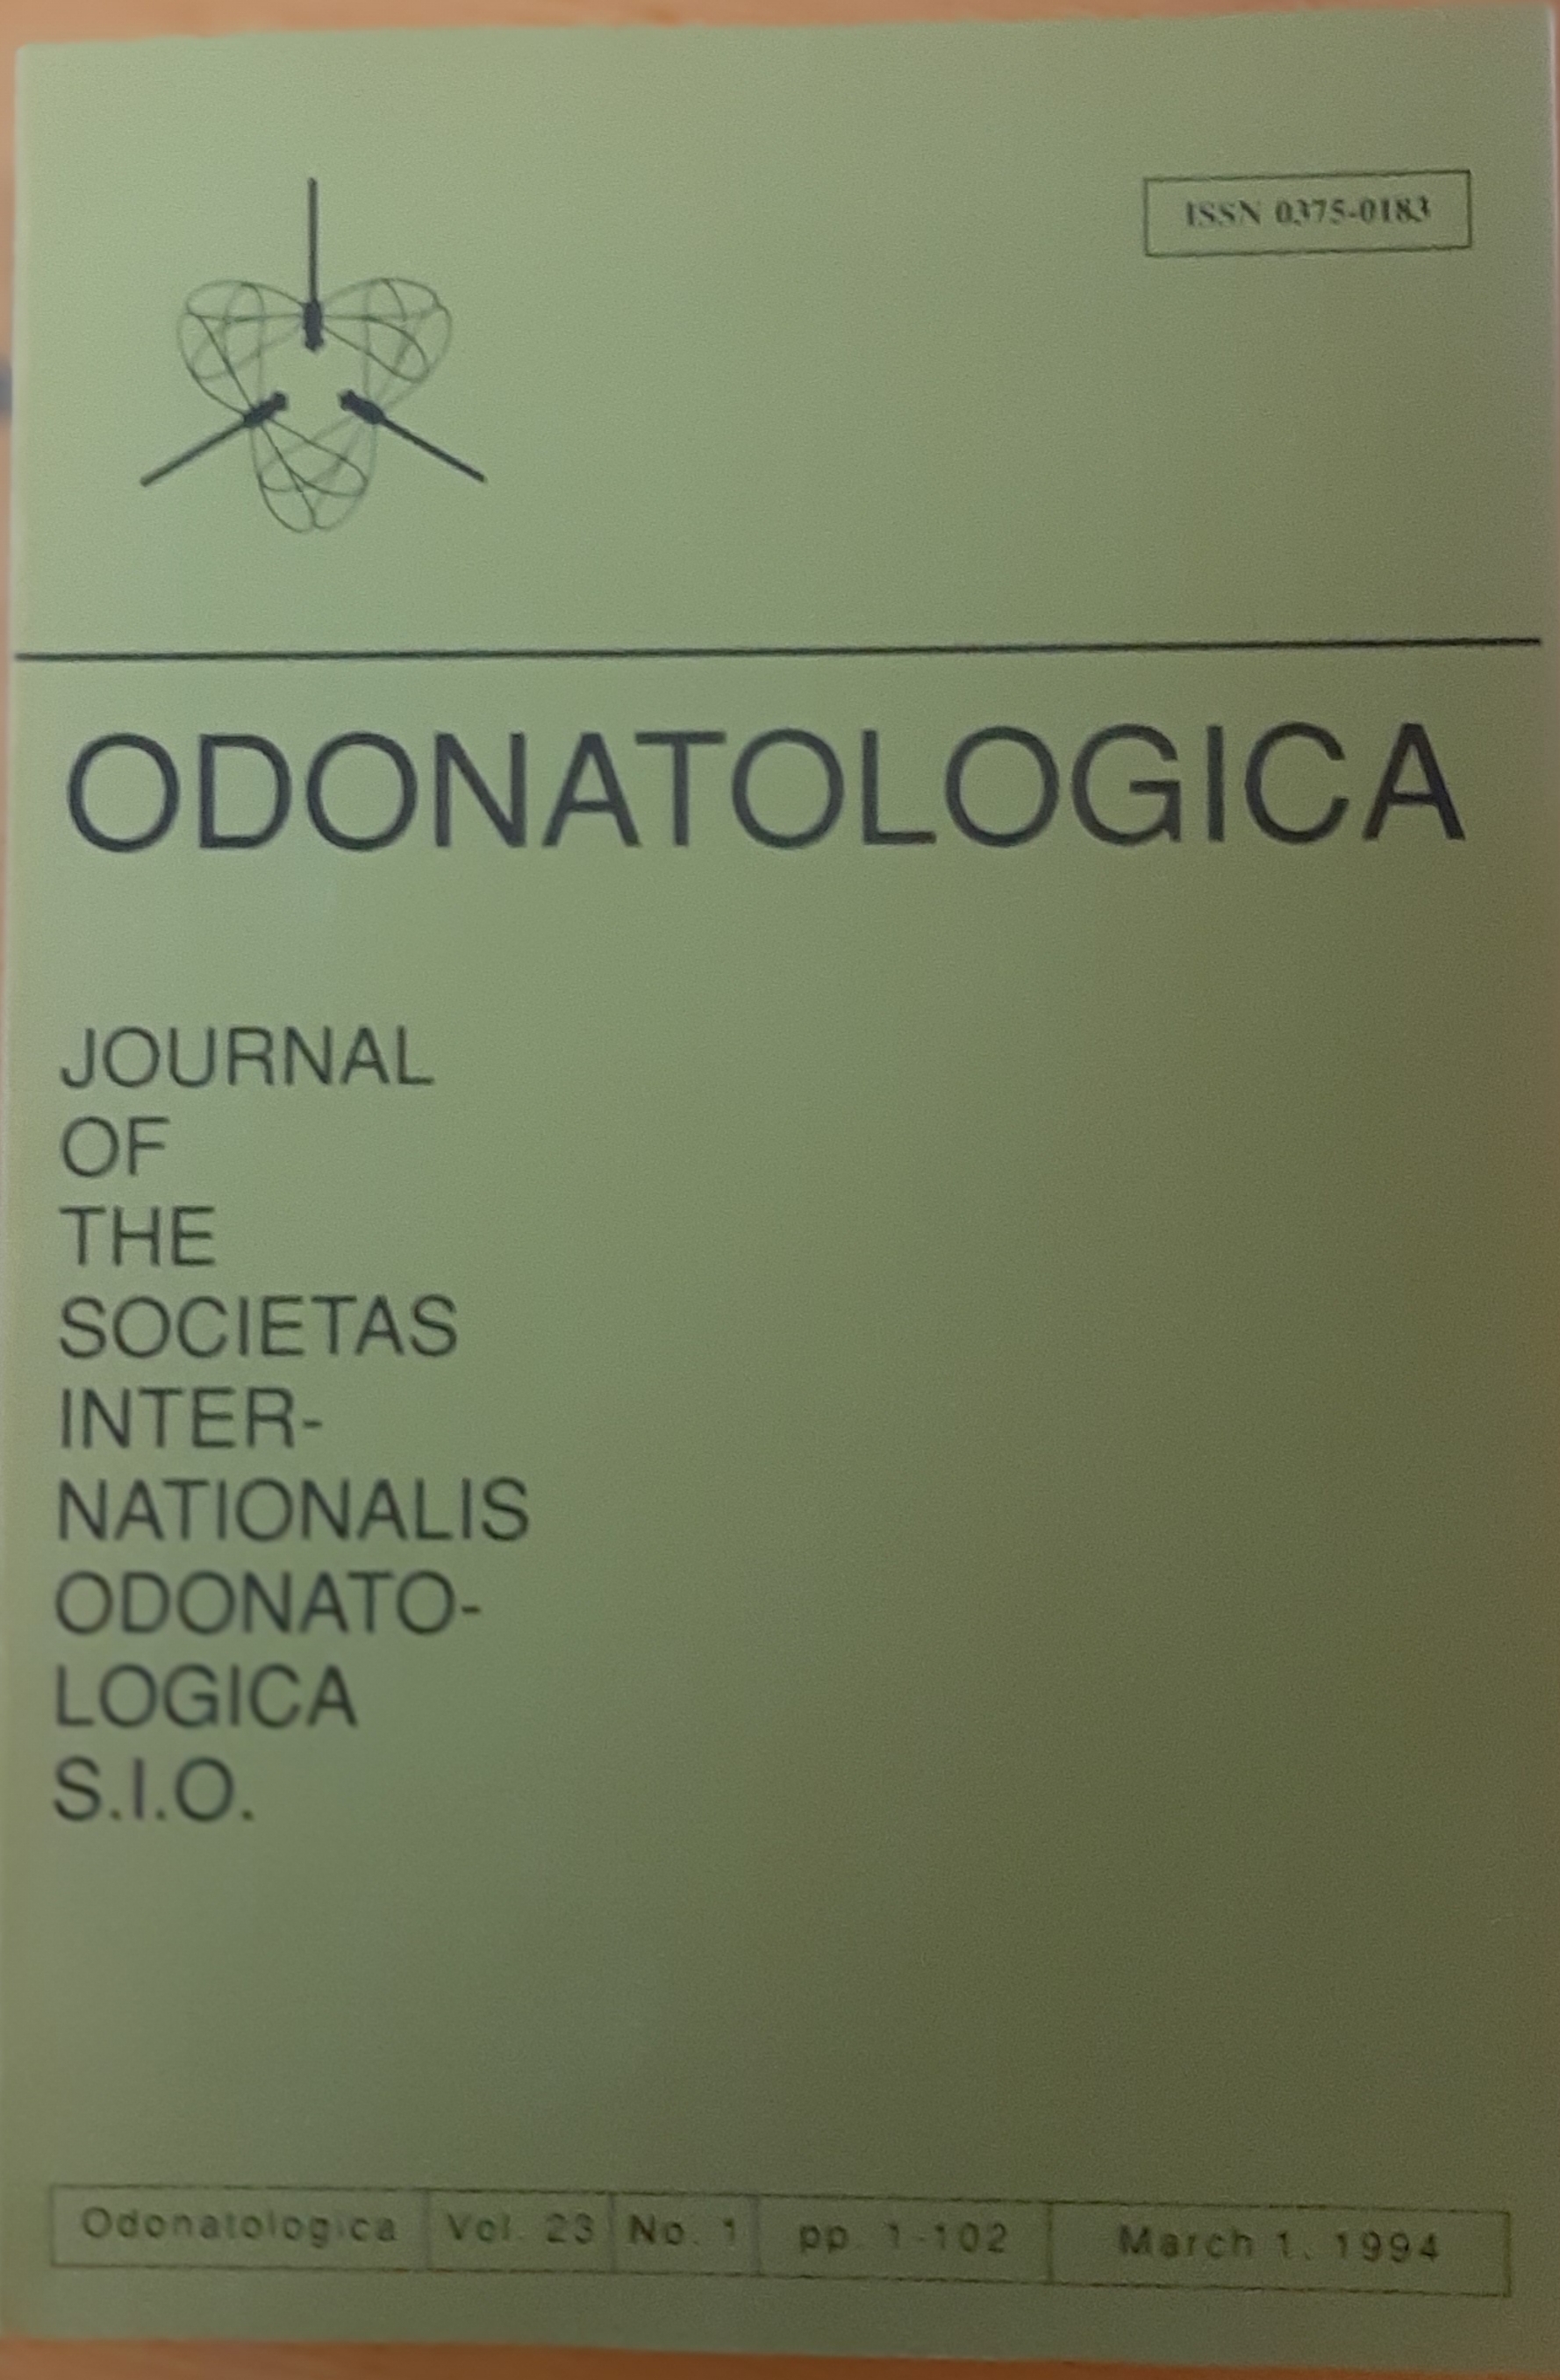 Odonatologica 1994/23. évf. 1. szám Journal of the Societas Internationalis Odonatologica S.I.O. (Rippl-Rónai Múzeum RR-F)